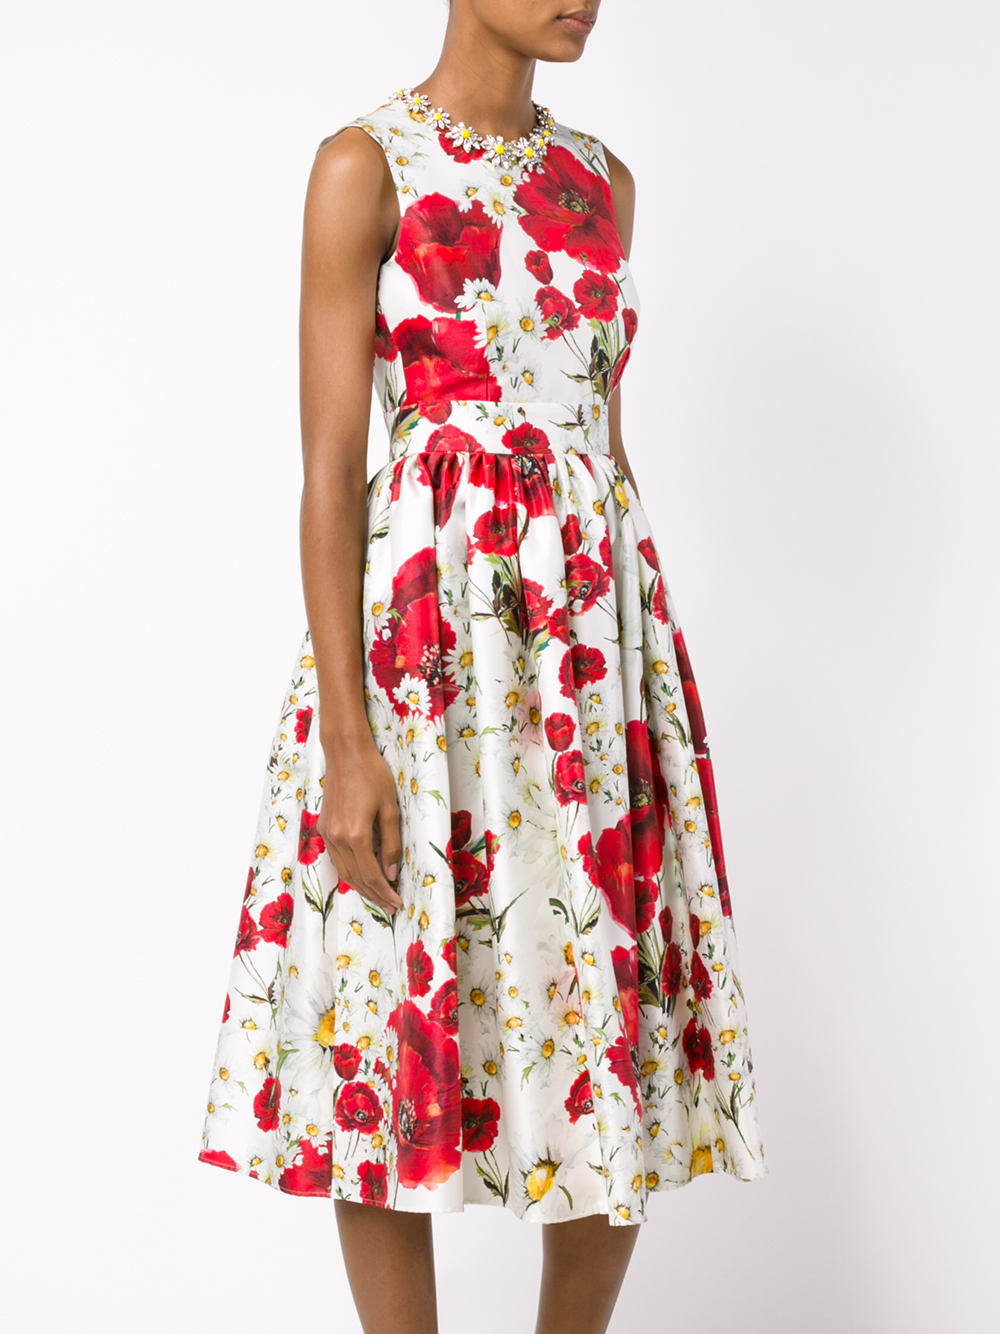 Lyst - Dolce & Gabbana Sleeveless Floral Print Cotton-silk Dress in Red